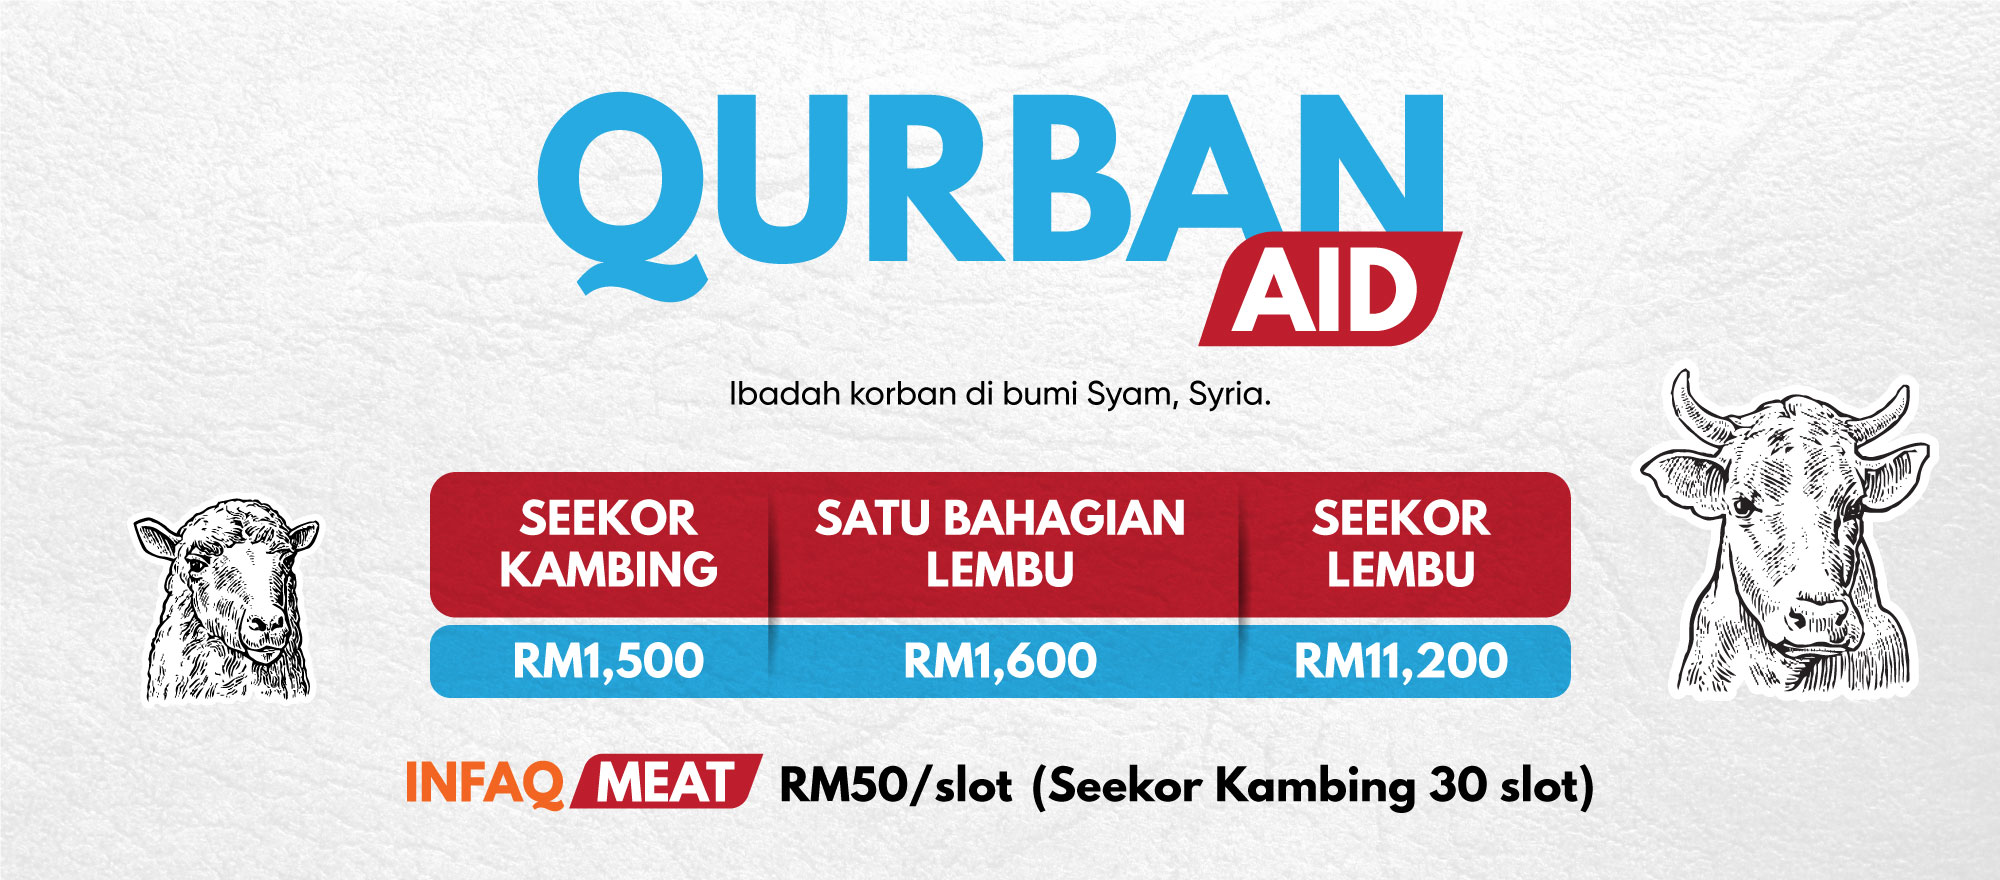 Poster-Qurban-Aid-header-website